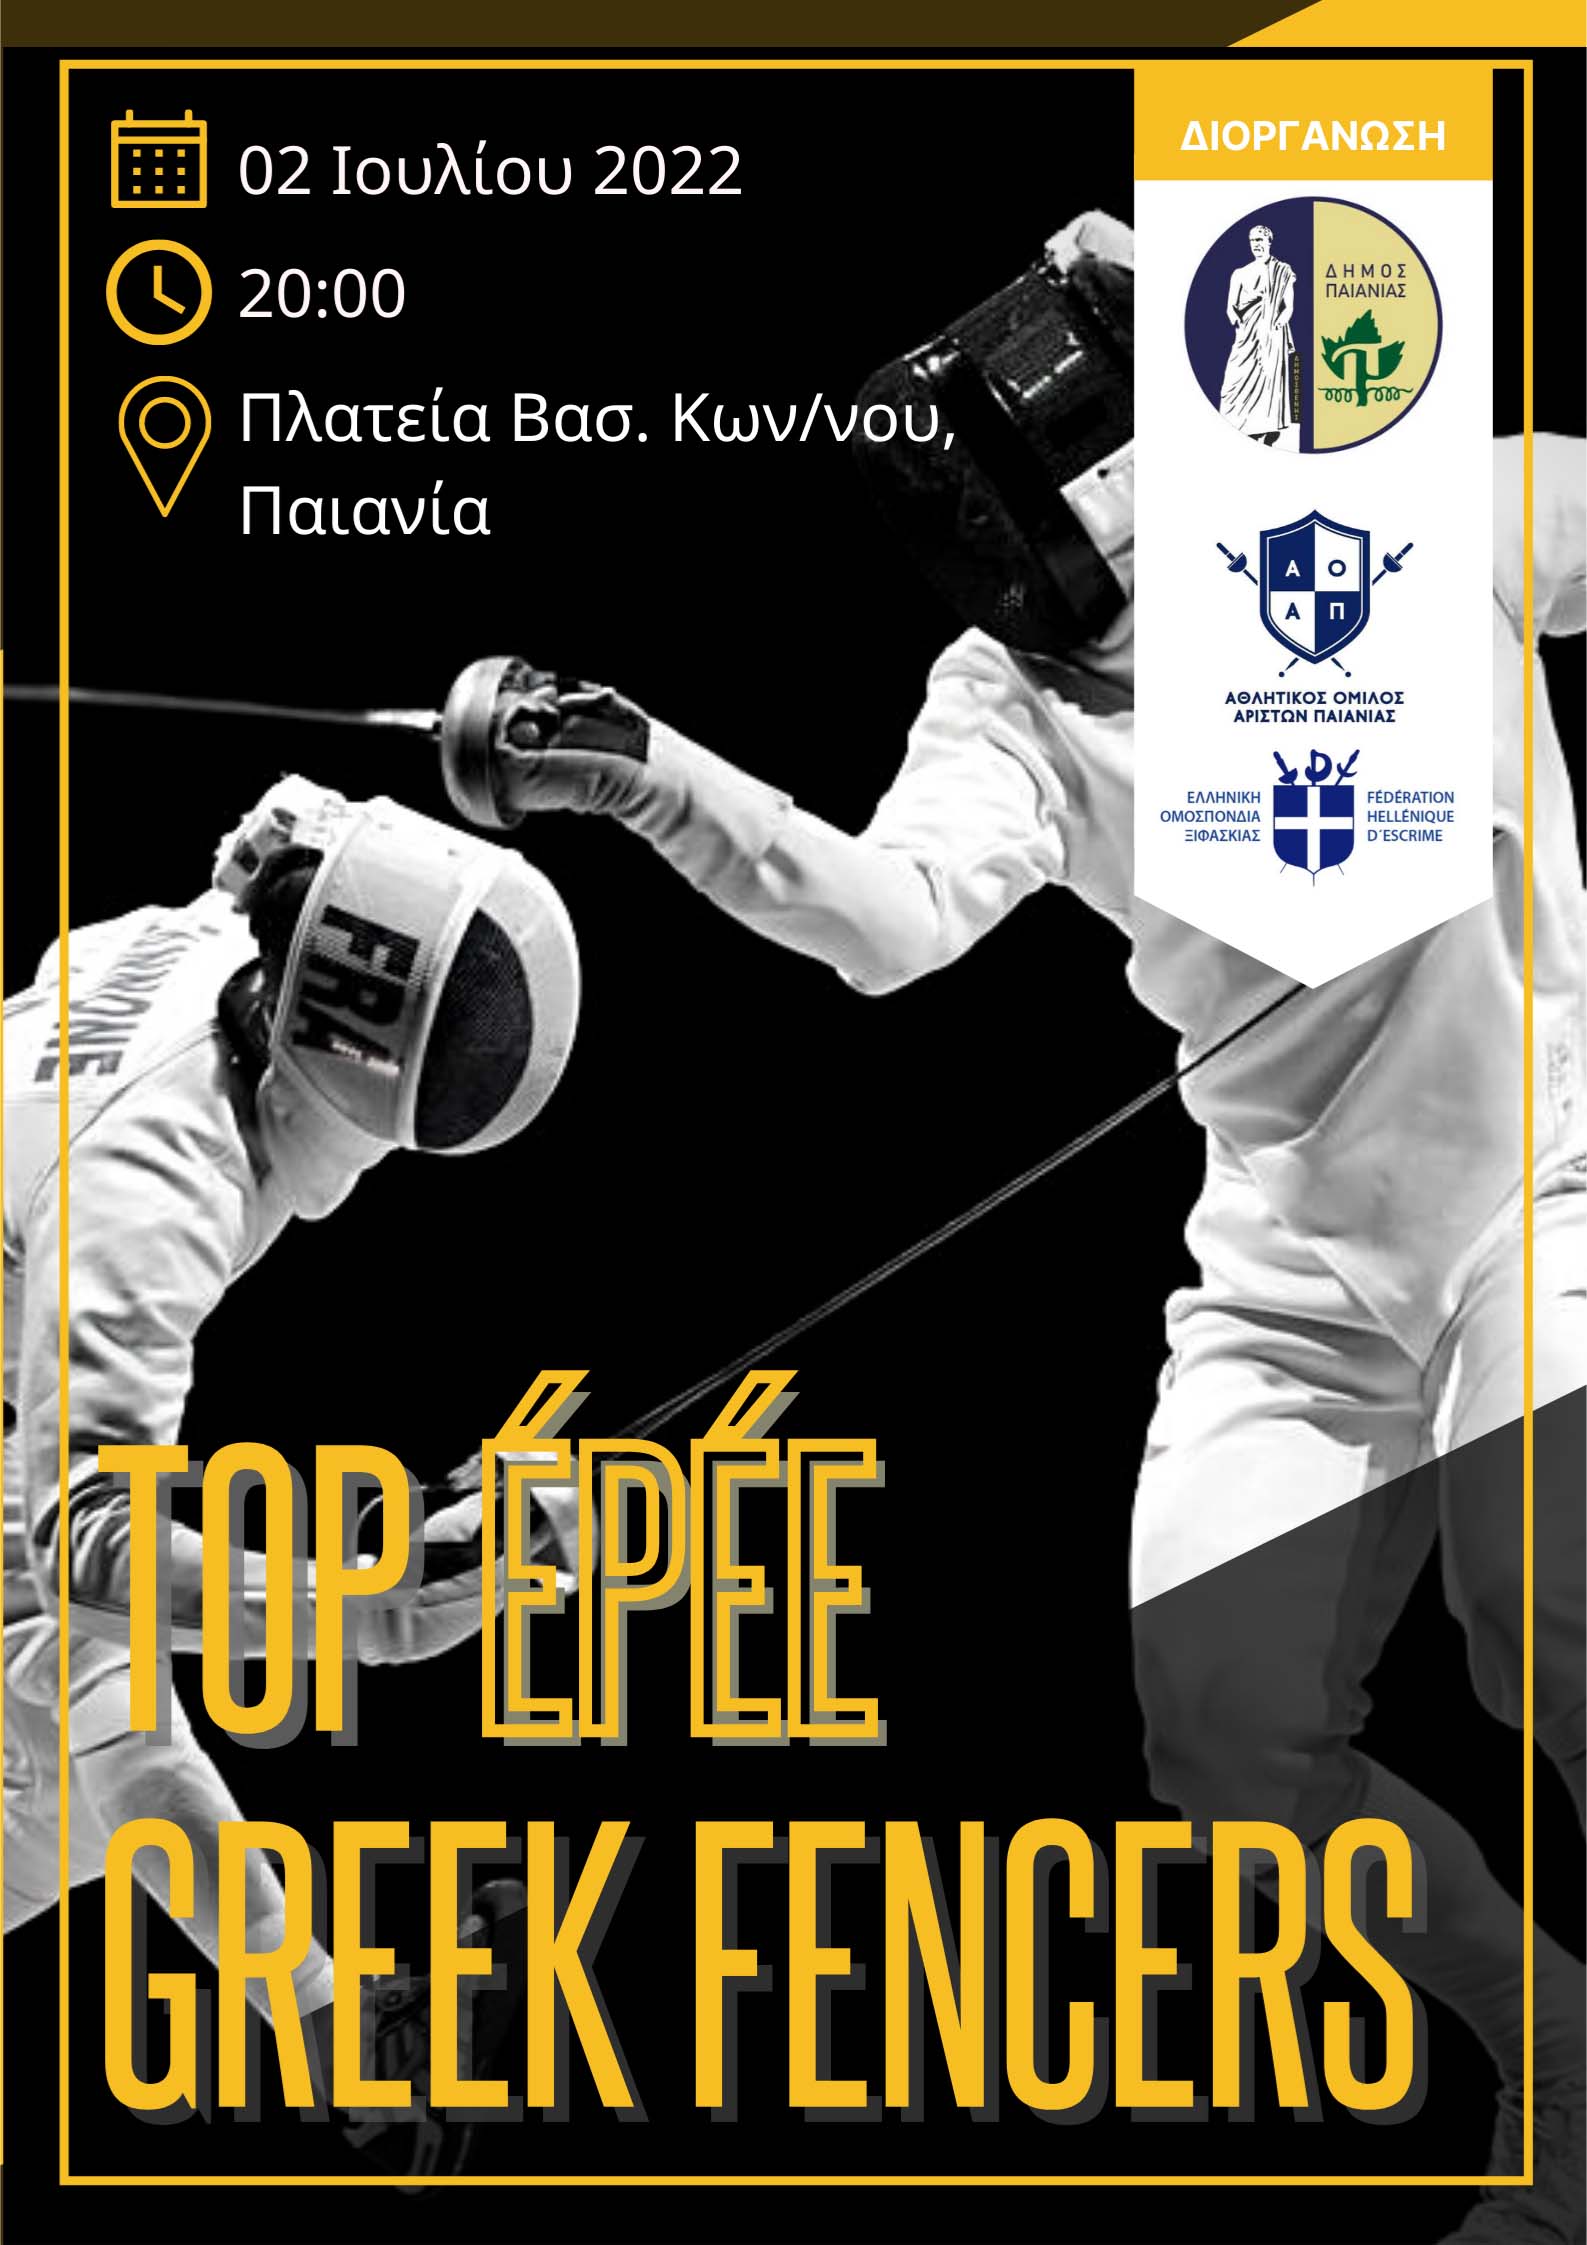 Top - Epee Greek Fencers 2022: Στον Δήμο Παιανίας 8 κορυφαίοι πρωταθλητές της ξιφασκίας